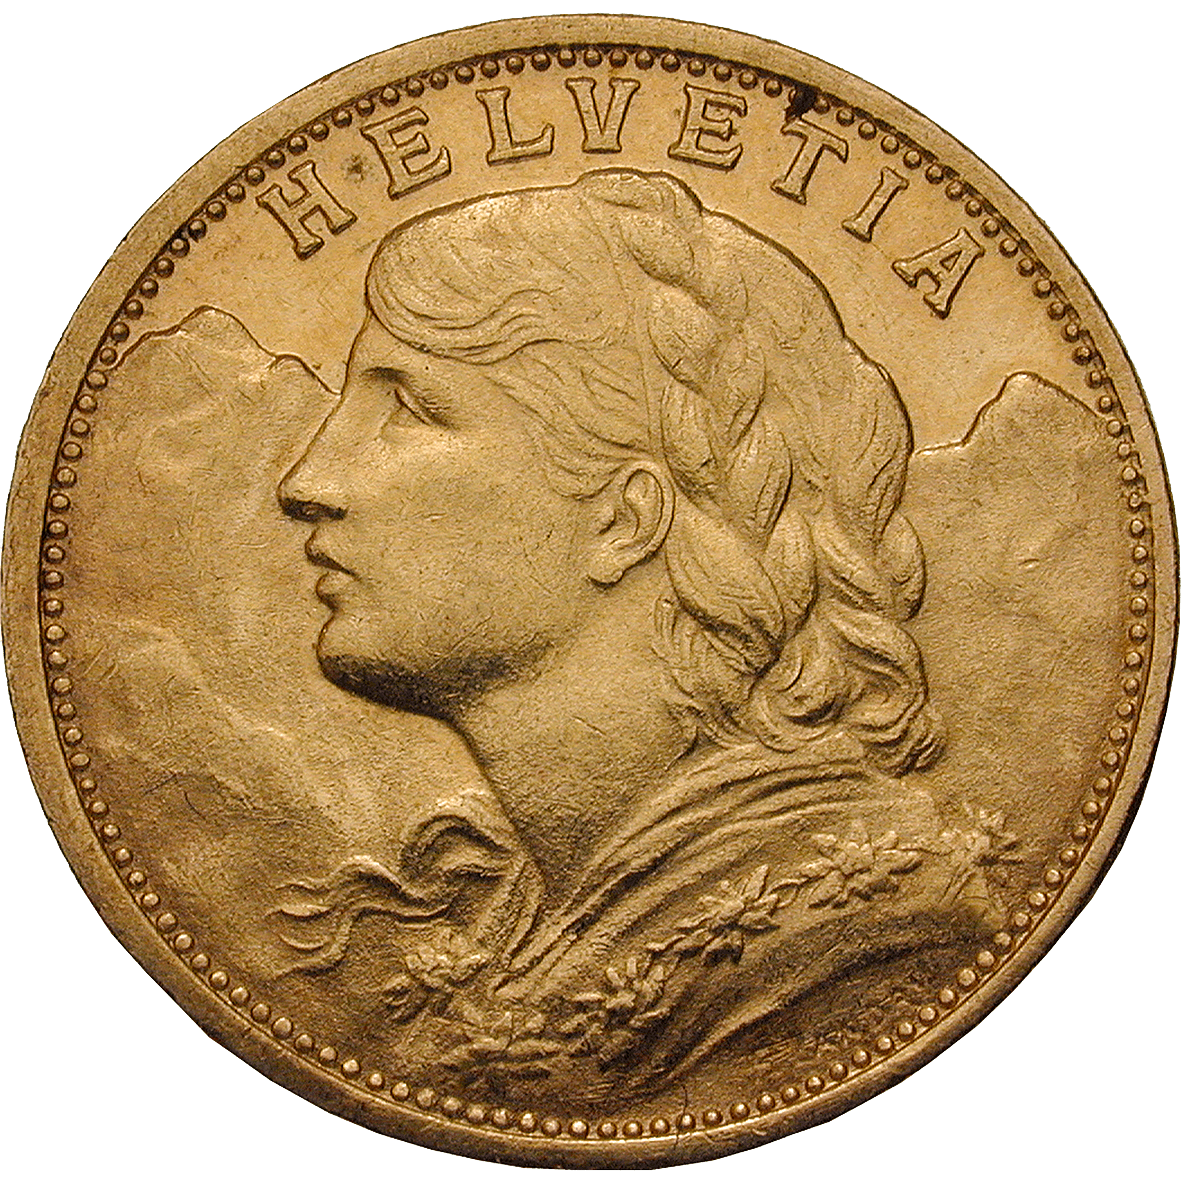 Swiss Confederation, 20 Francs (Vreneli) 1904 (obverse)